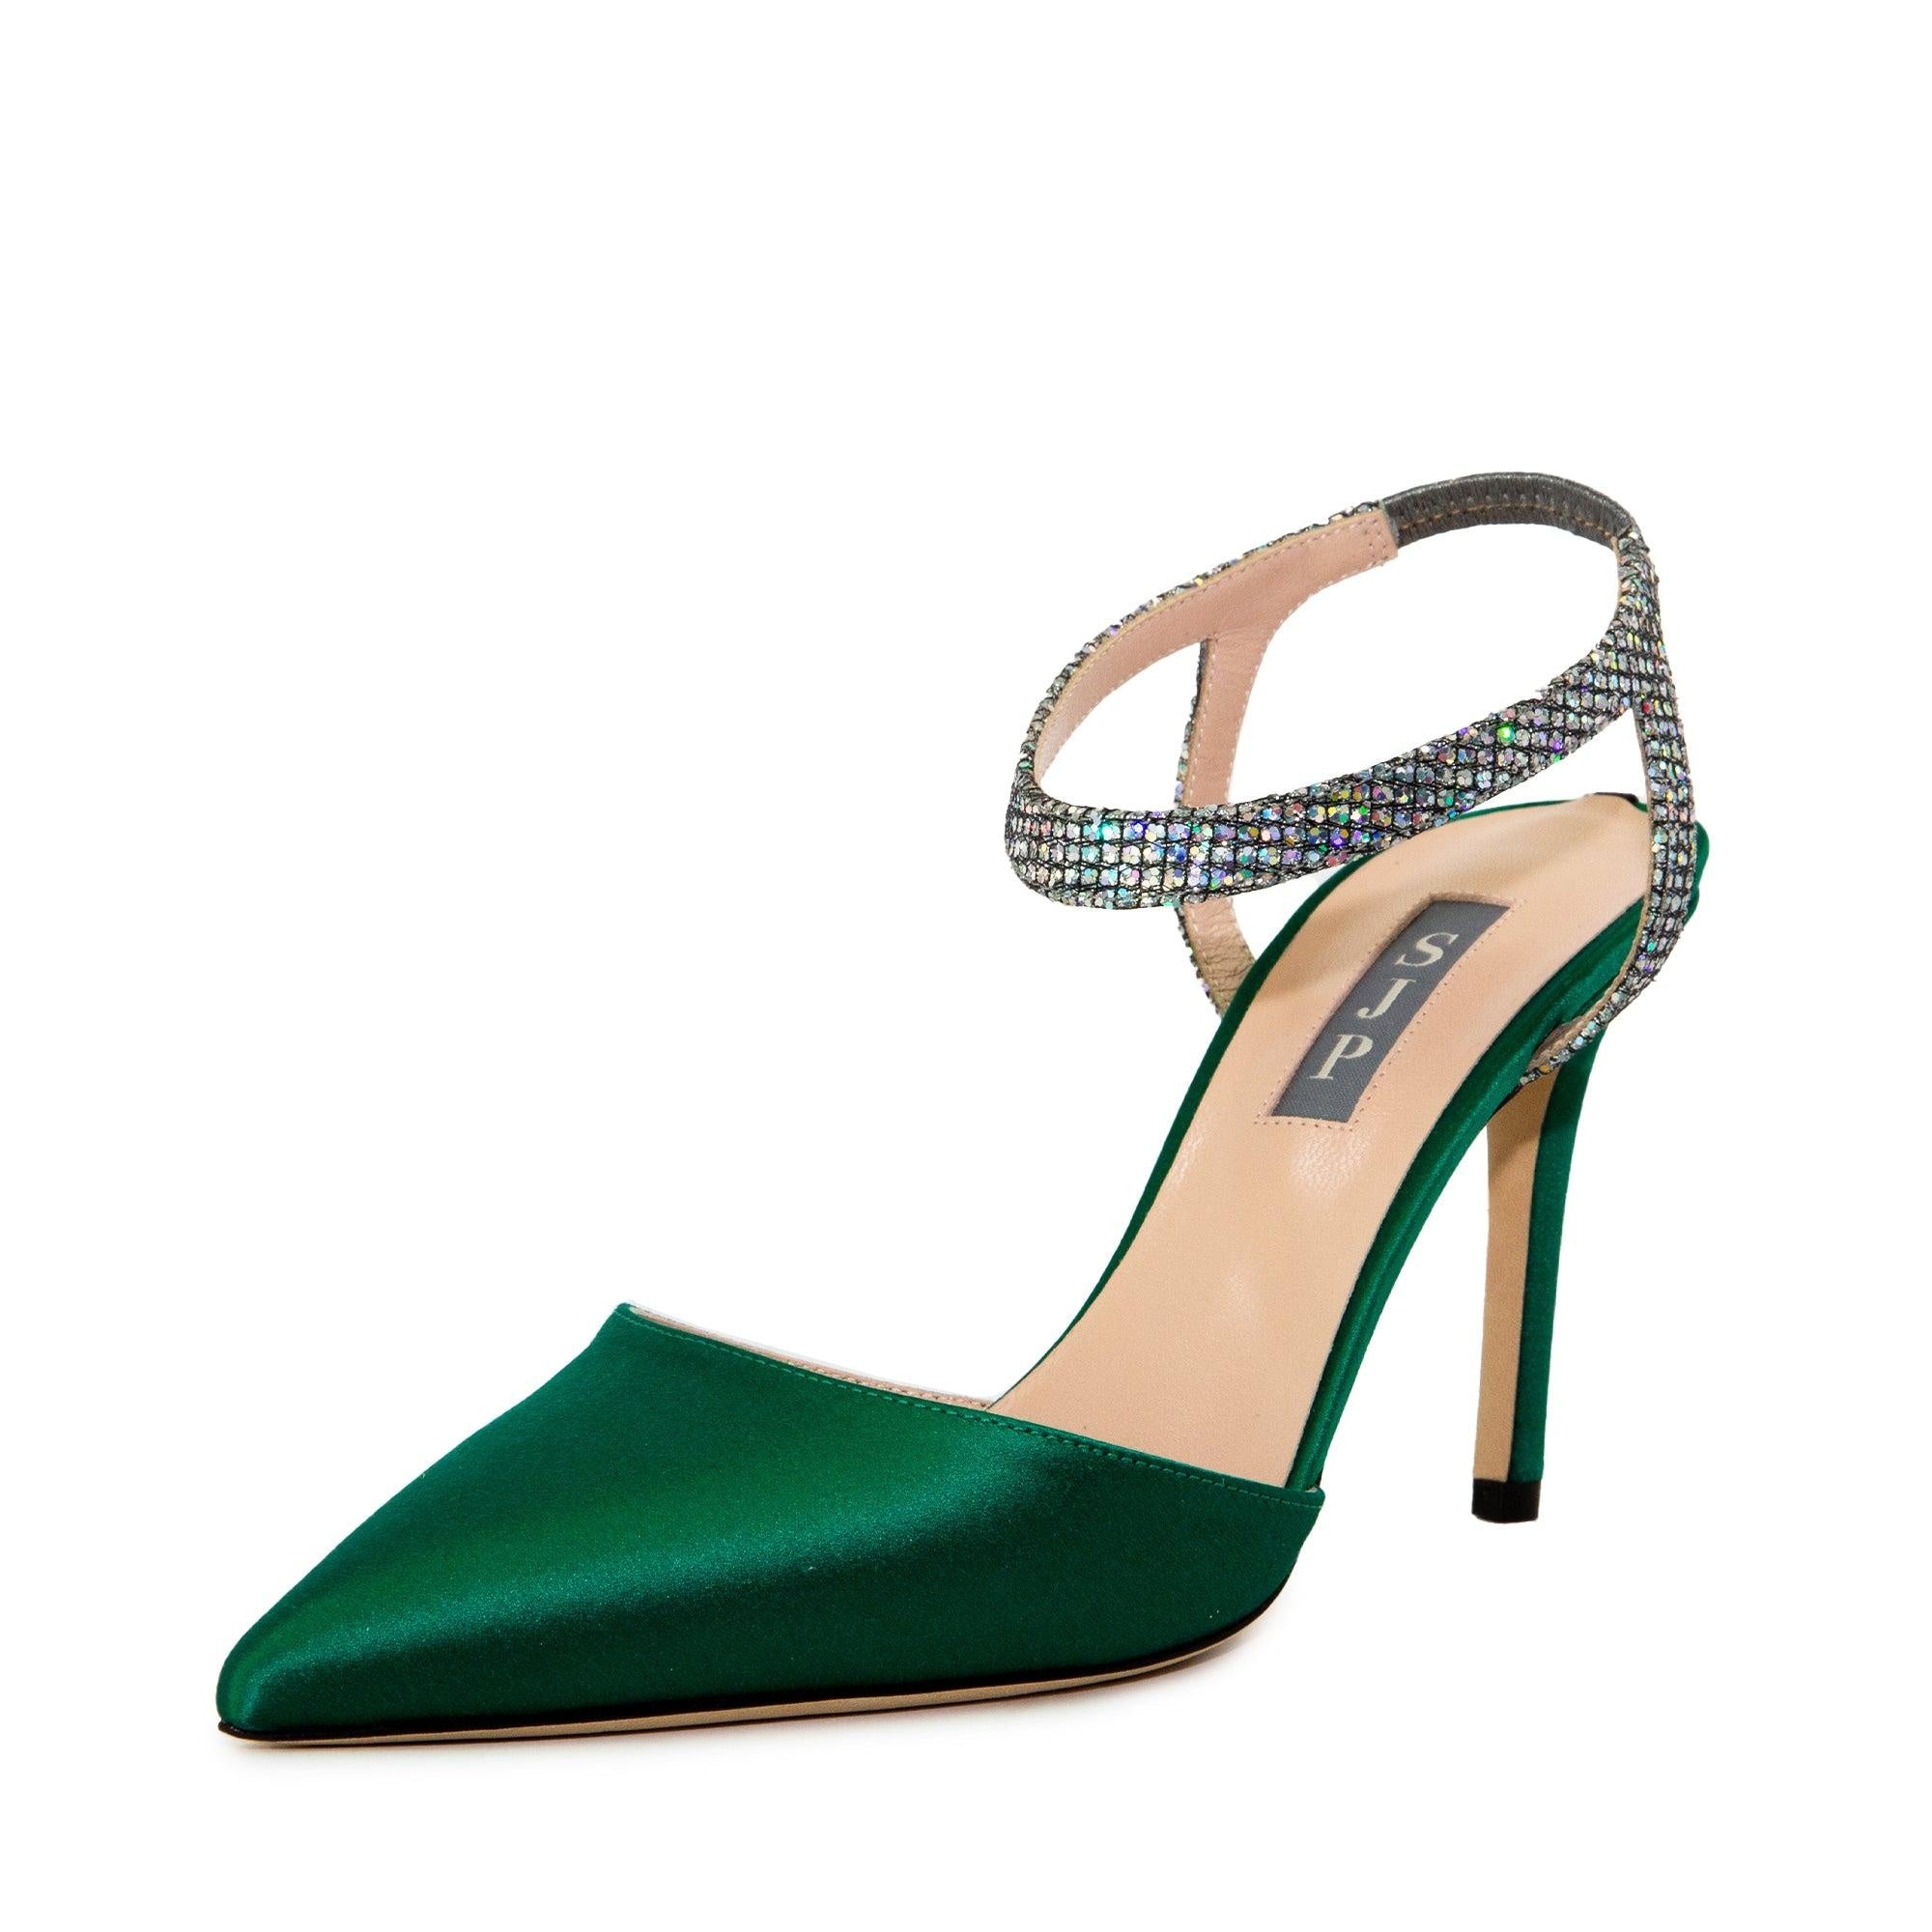 Single Emerald Green Satin Sandals 90mm - InstaRunway.com